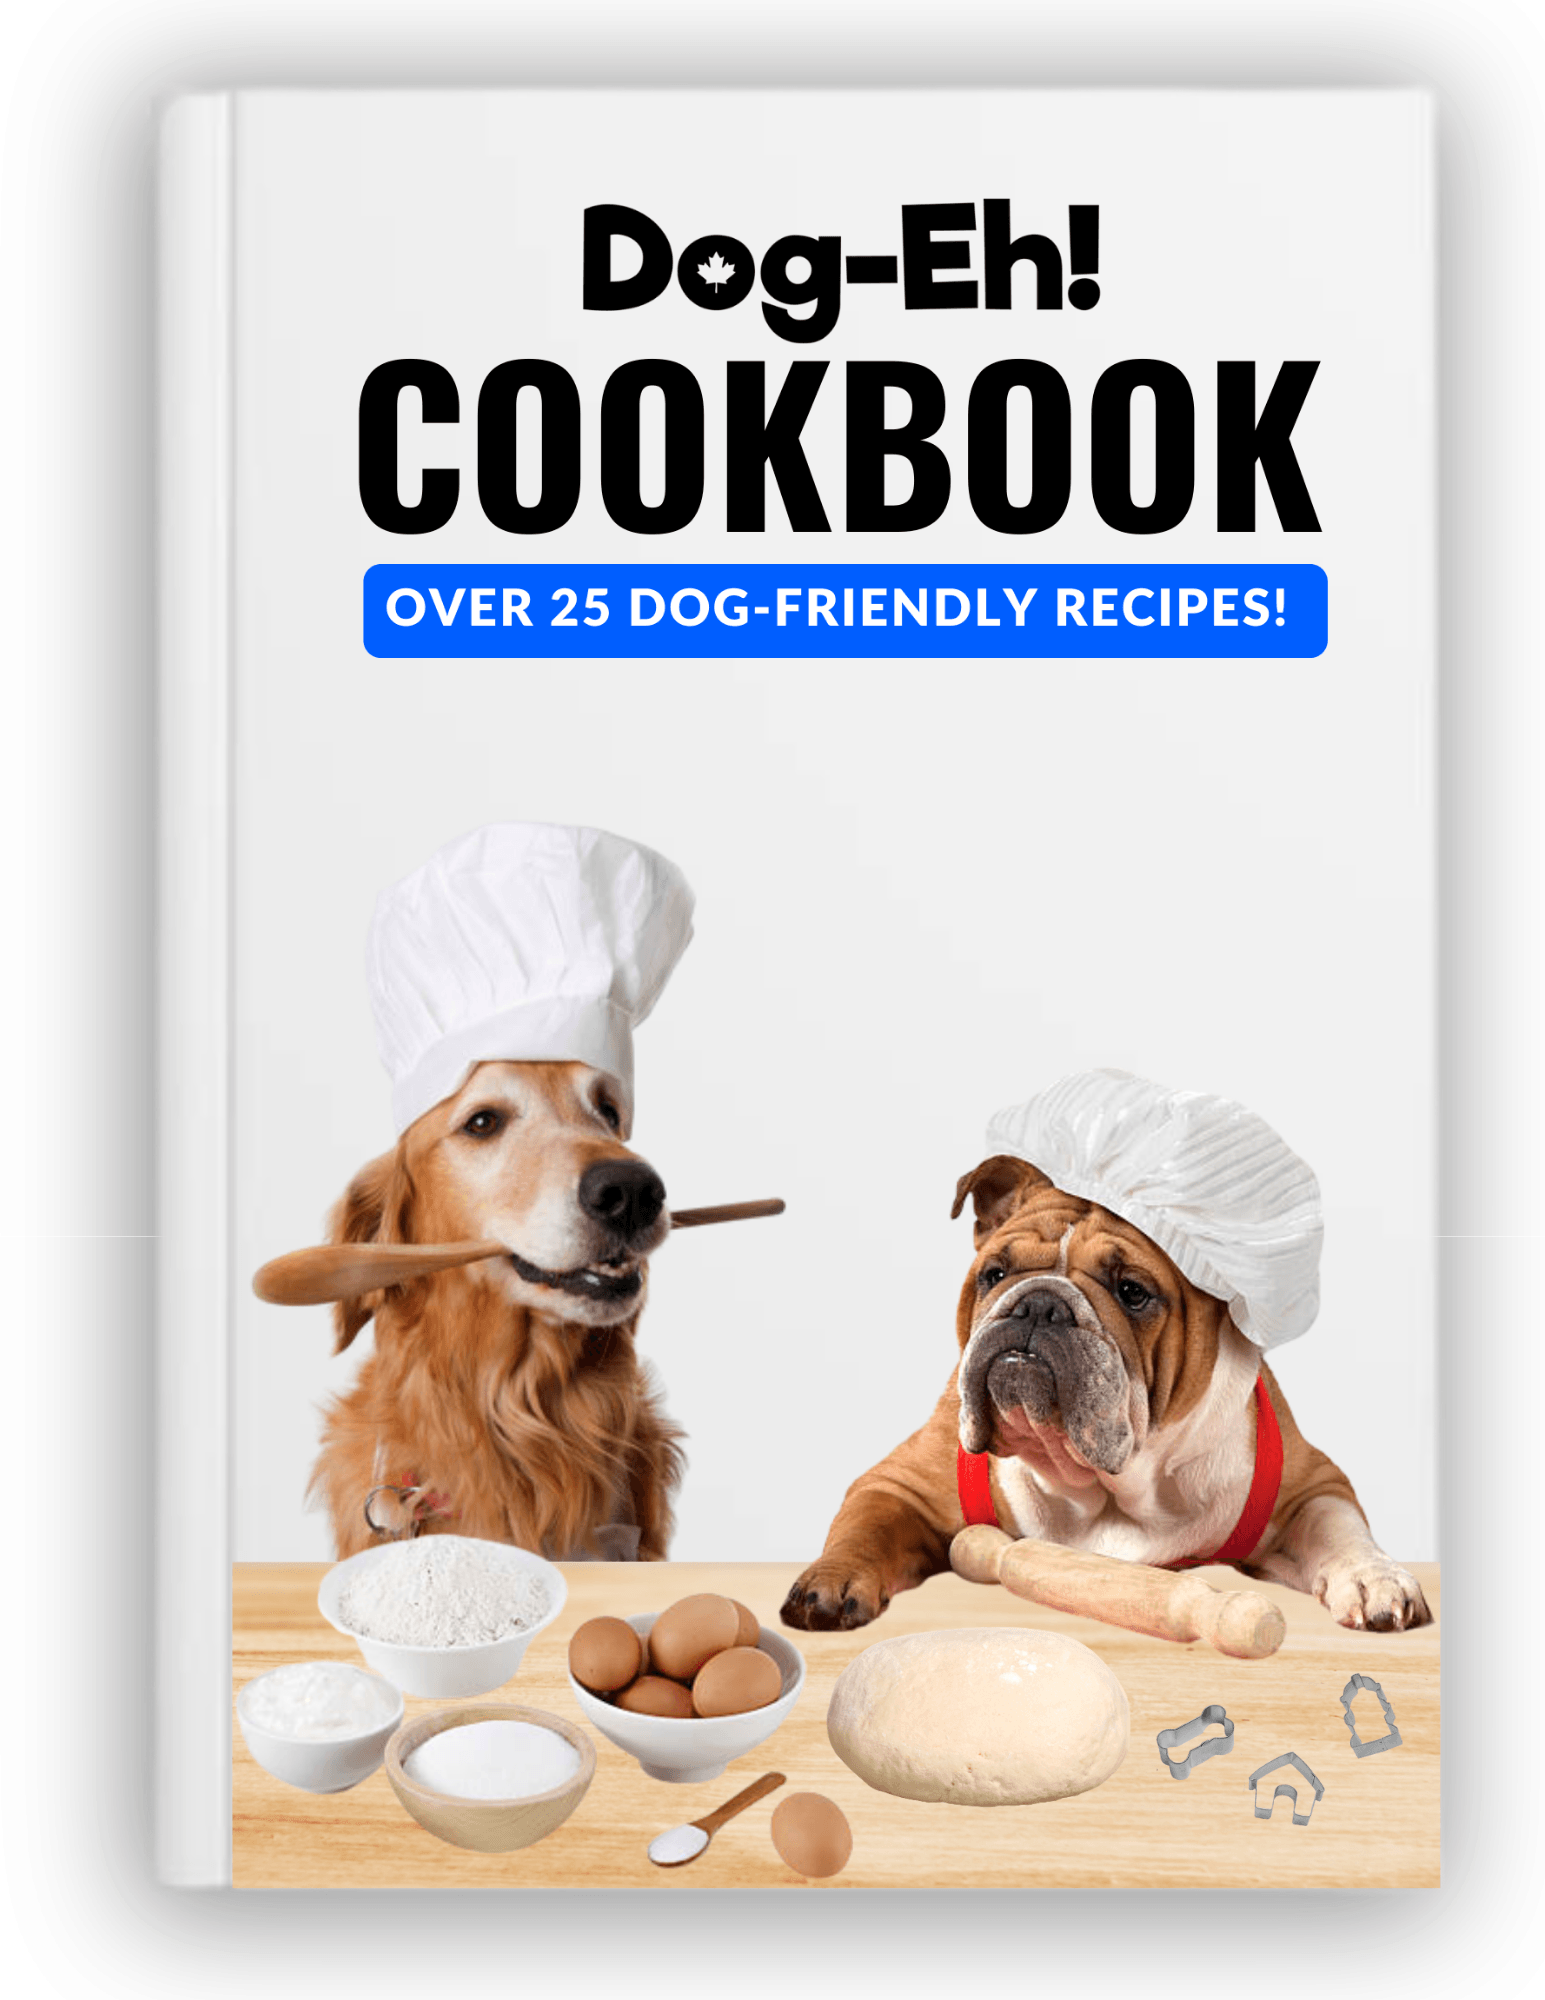 Dog-Eh! Cookbook (eBook) Dog-Eh!